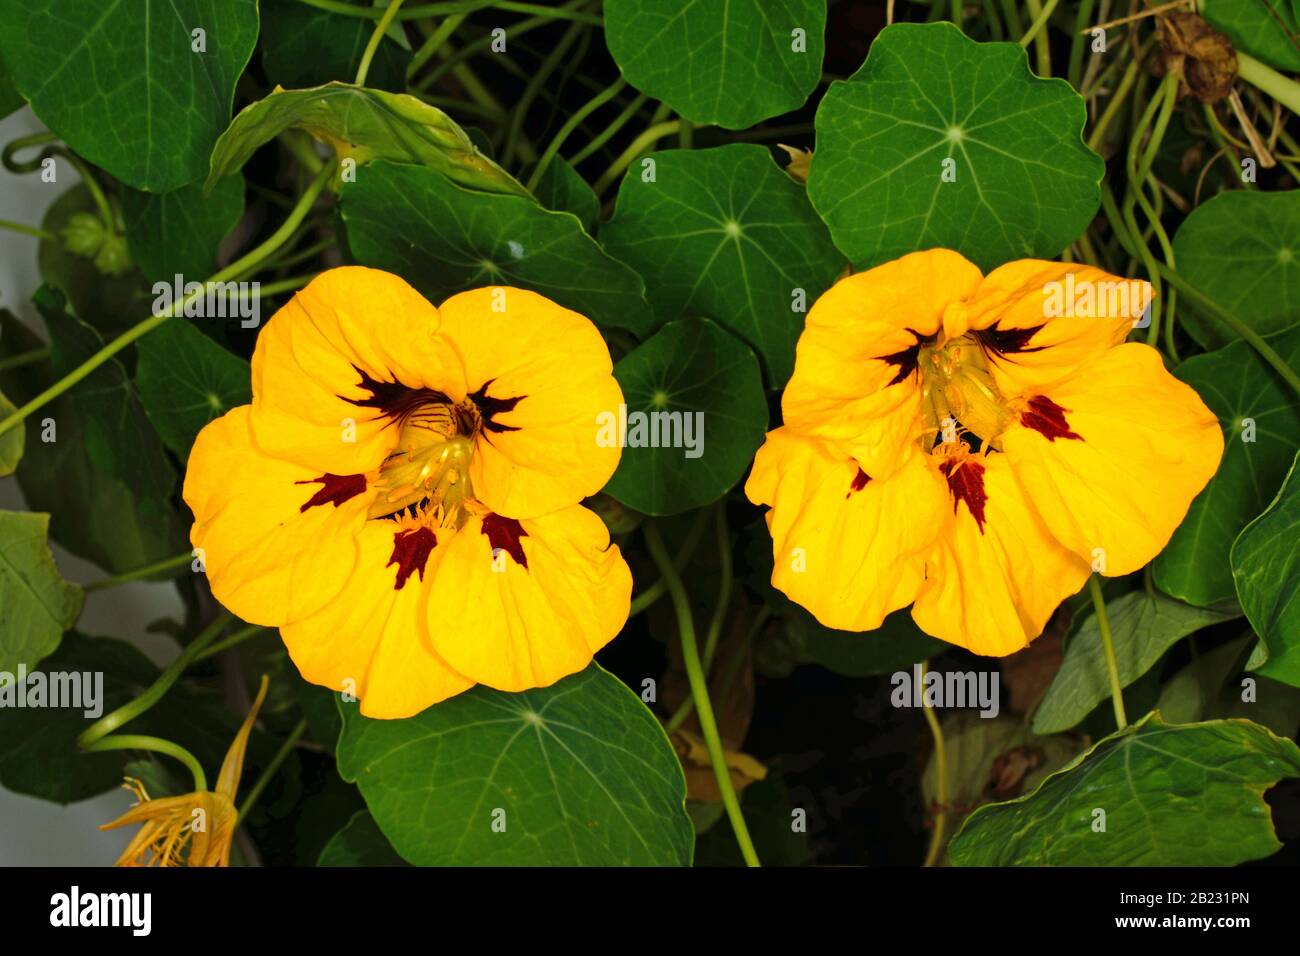 Nasturtium name Peach Melbra. Closeup of two yellow flowers with brown marks toward centre. Stock Photo